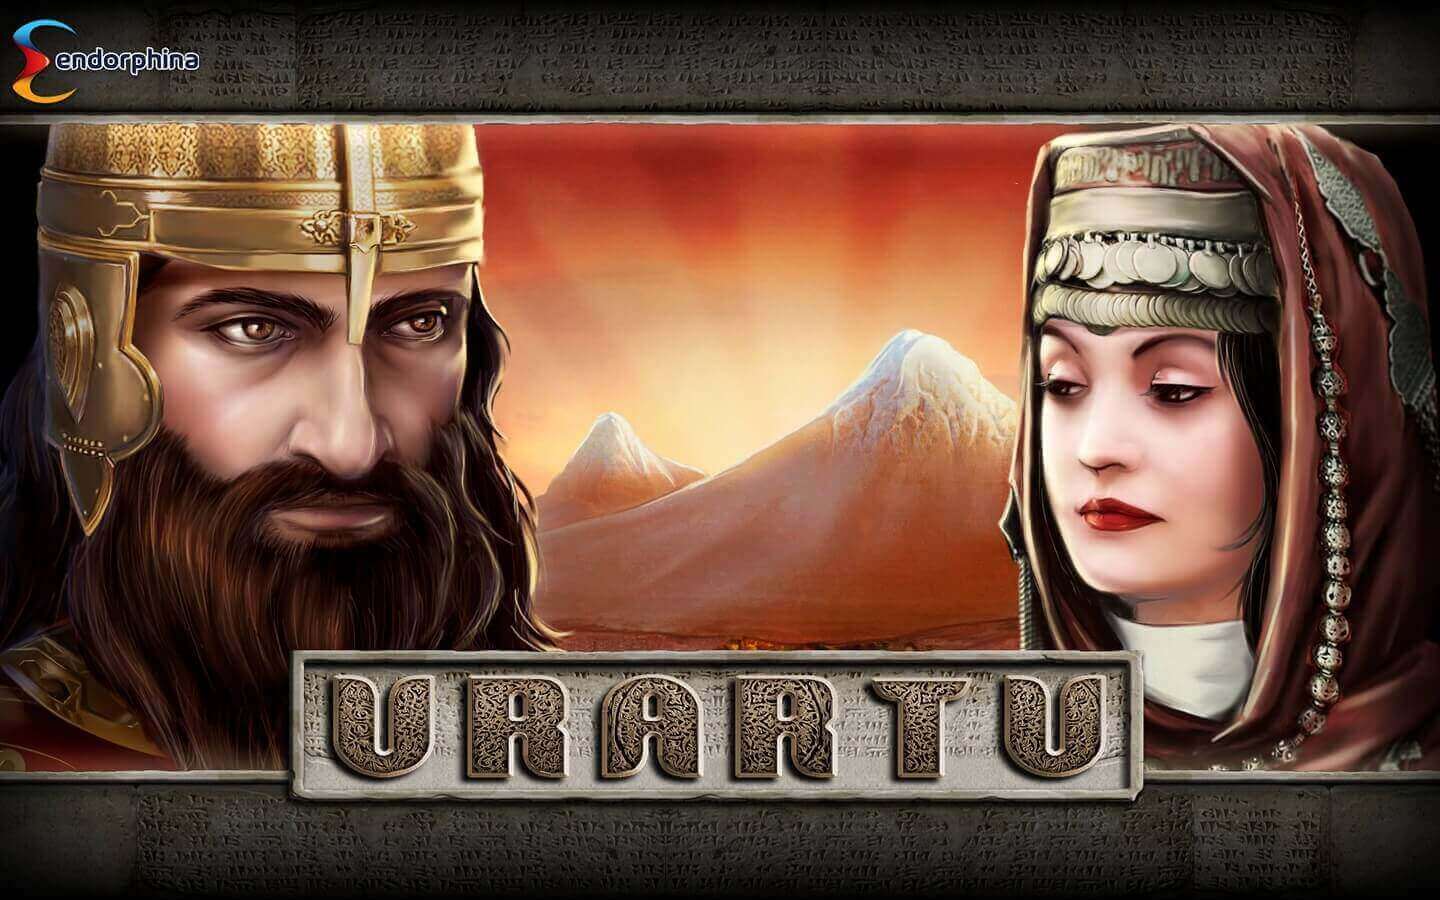 Urartu Spel proces